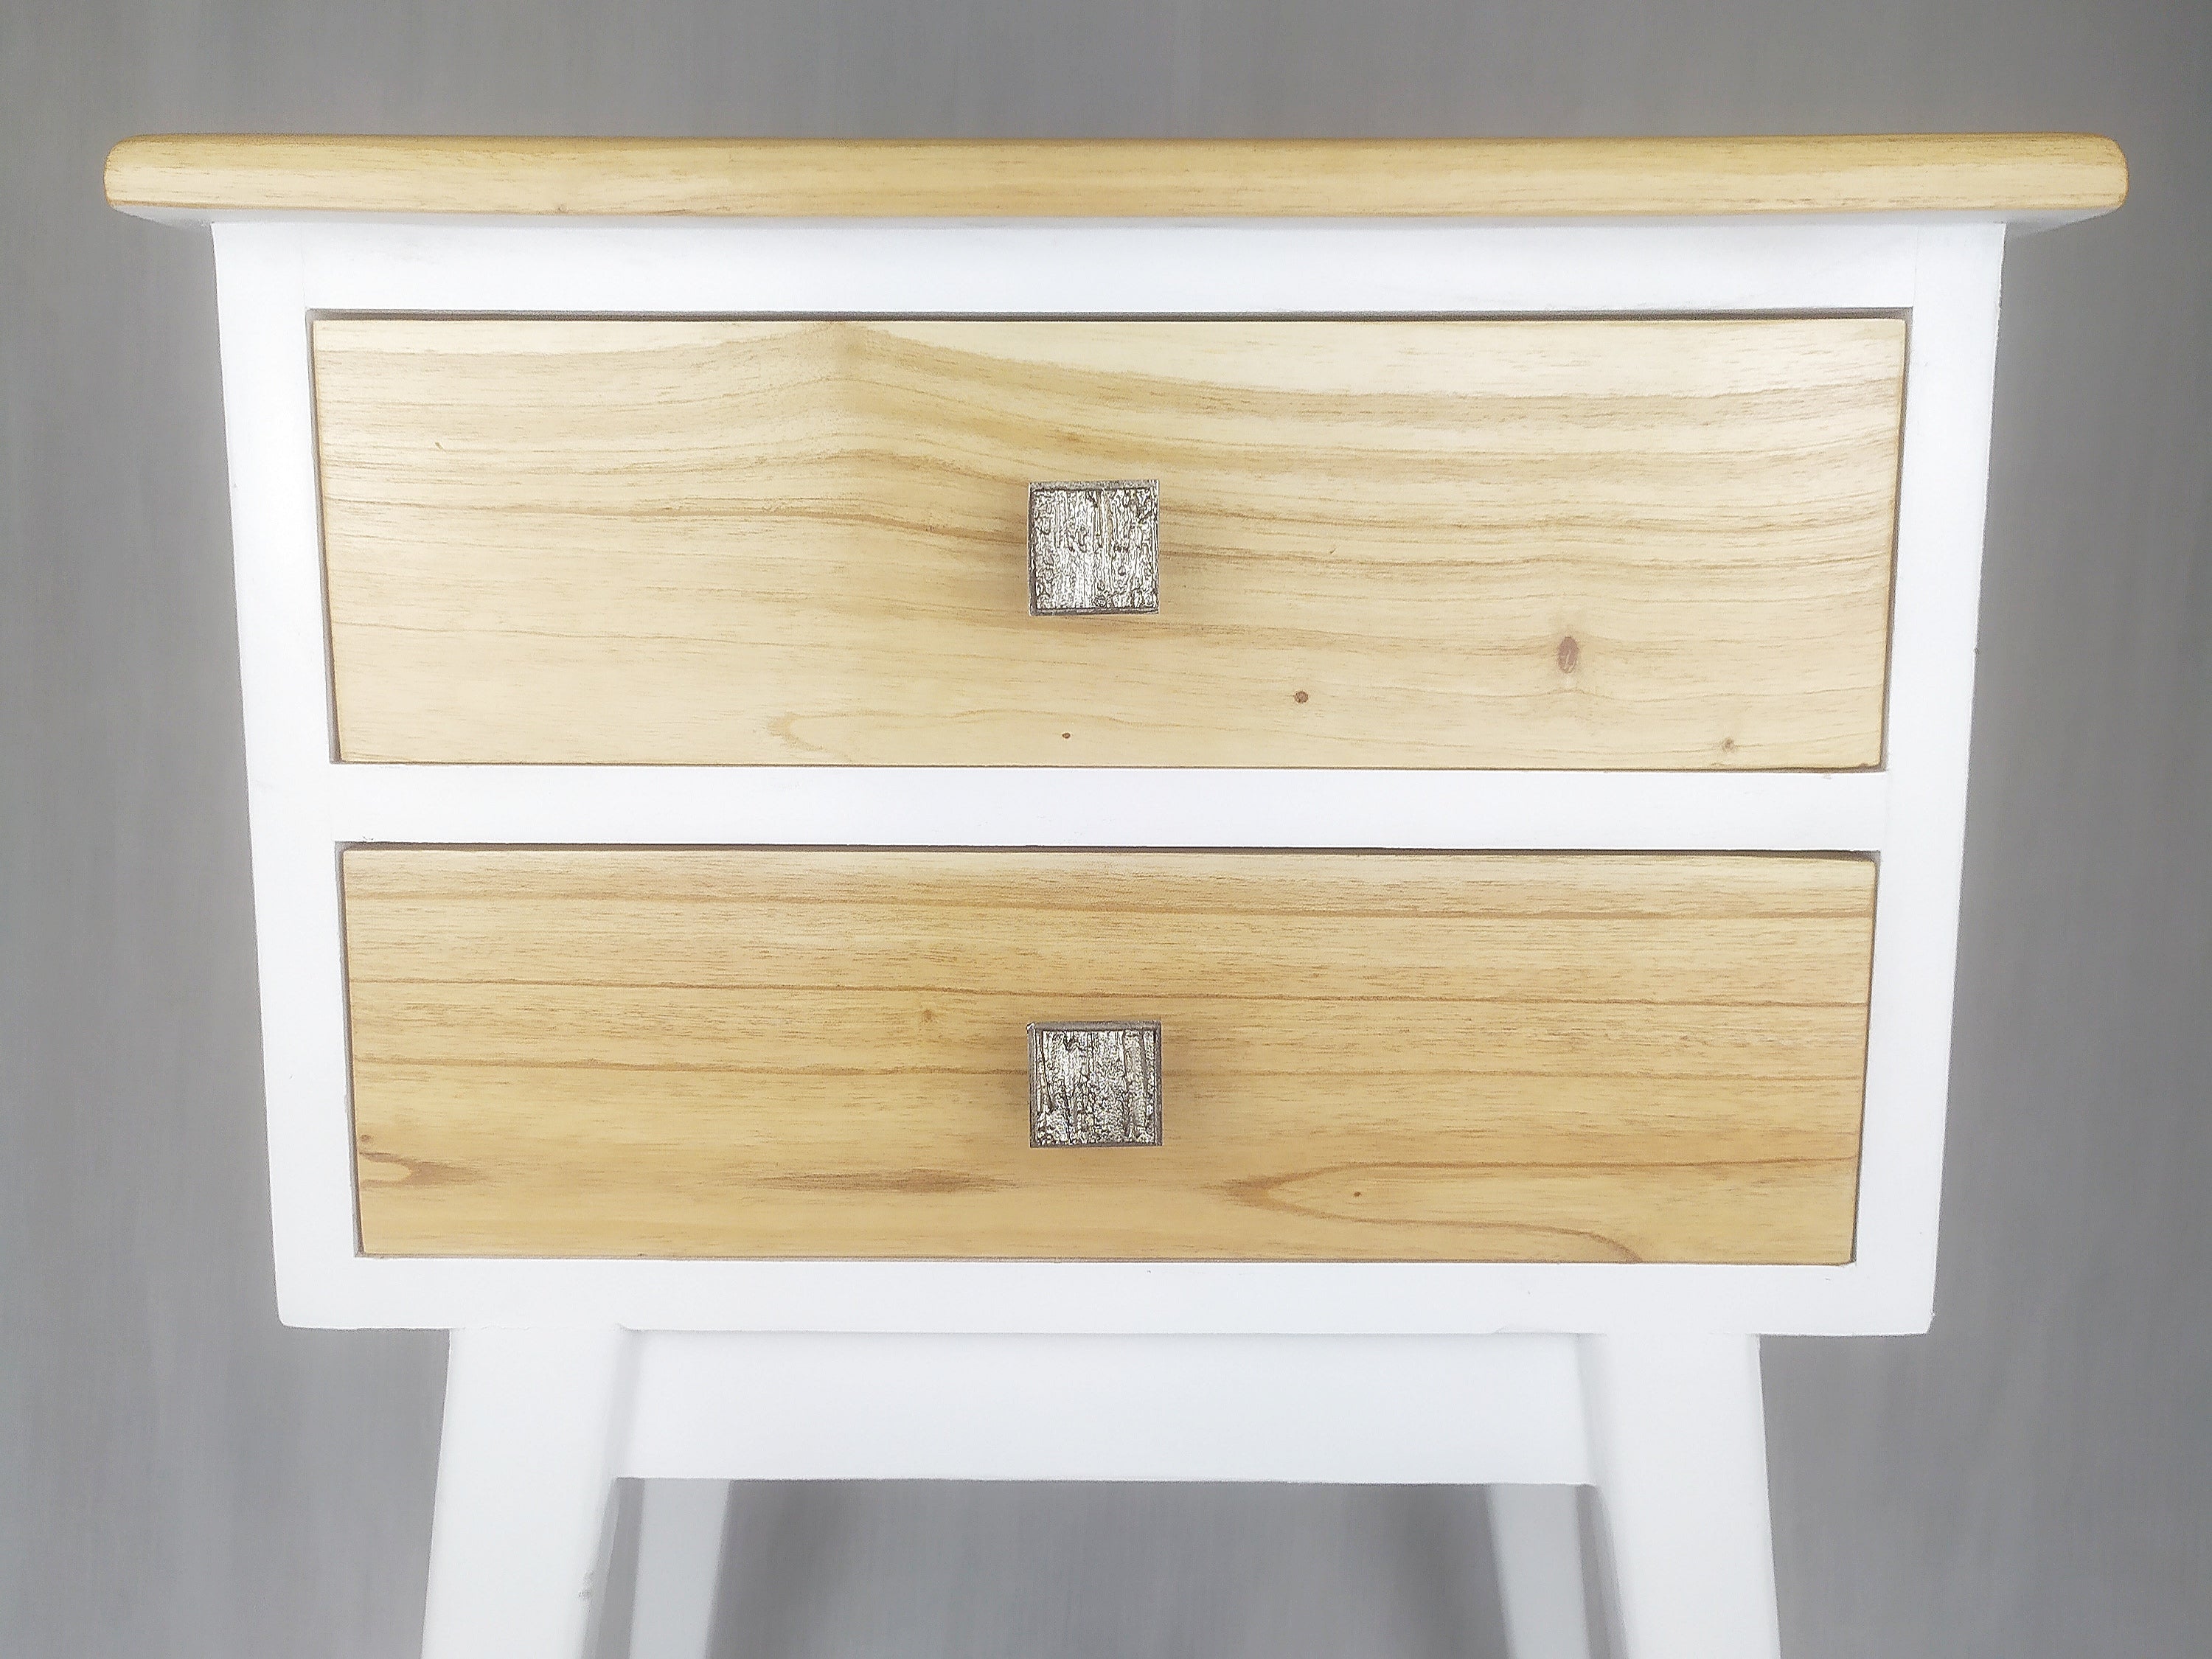 Wood Burn Square Knob - Textured Metal Cabinet Knob , set of 2